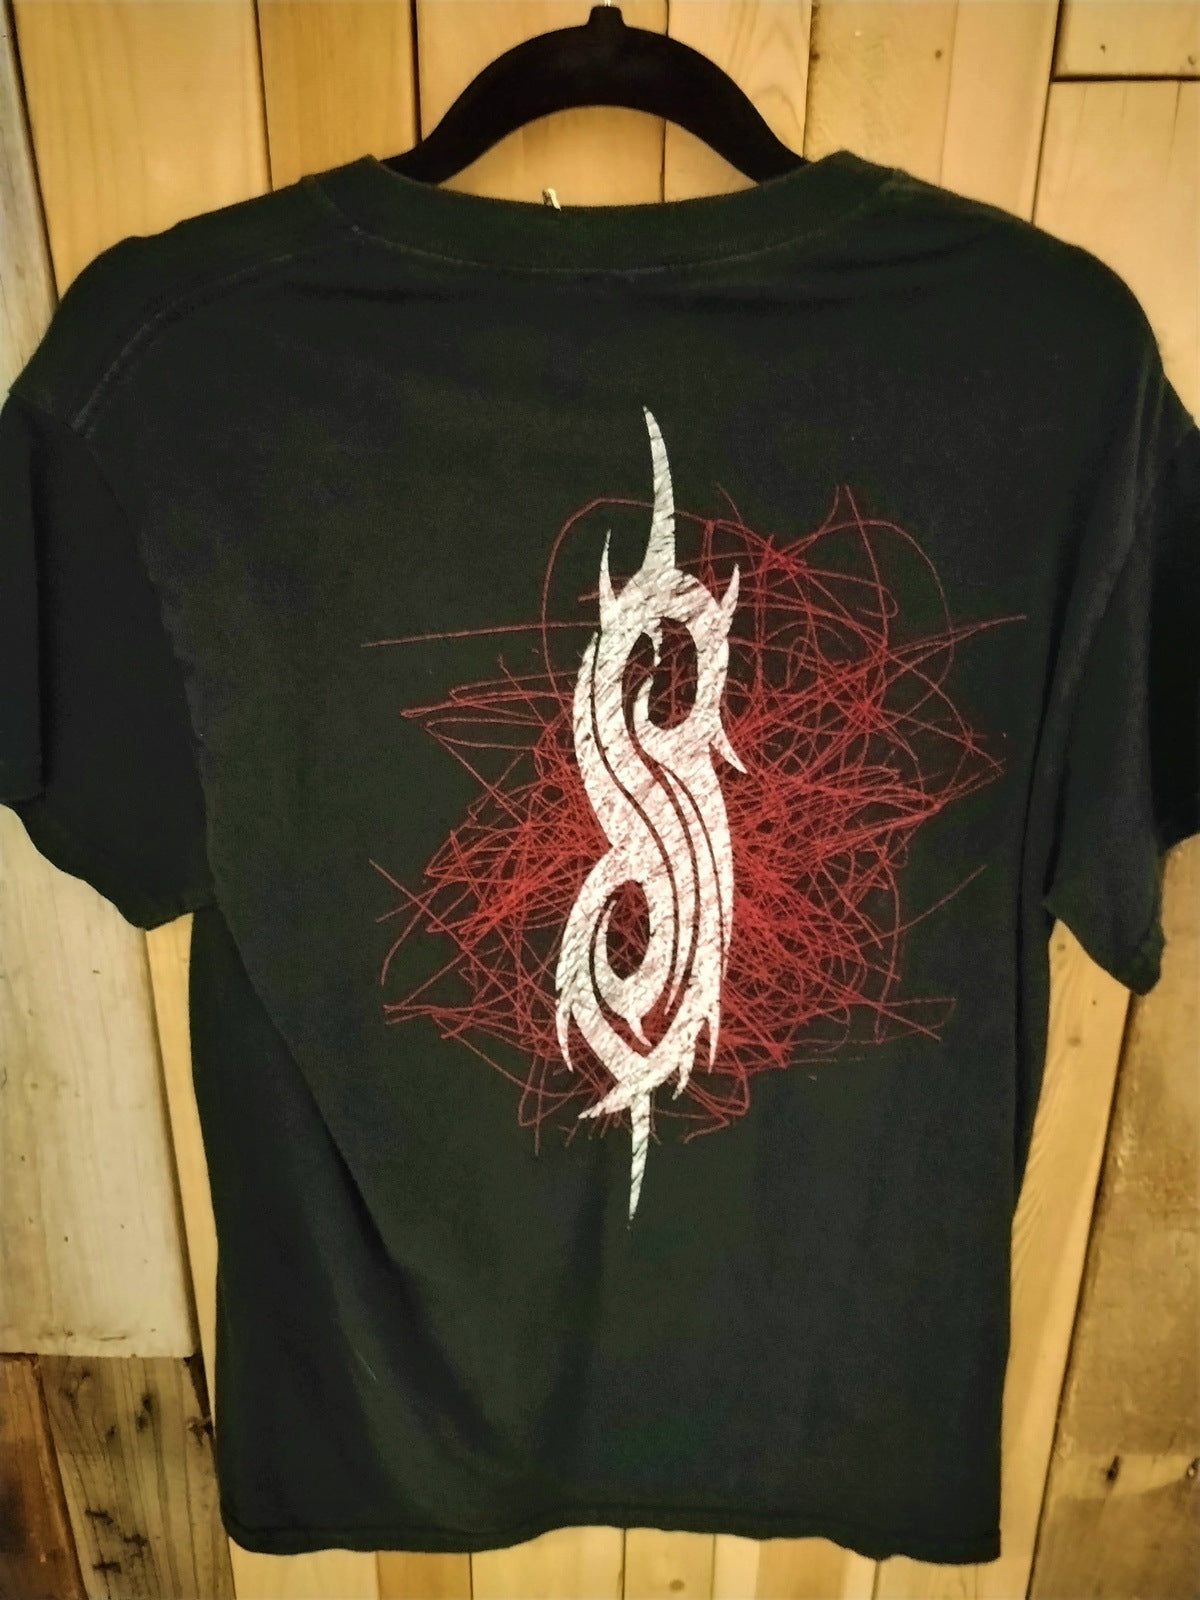 Slipknot Tee Shirt Size Small